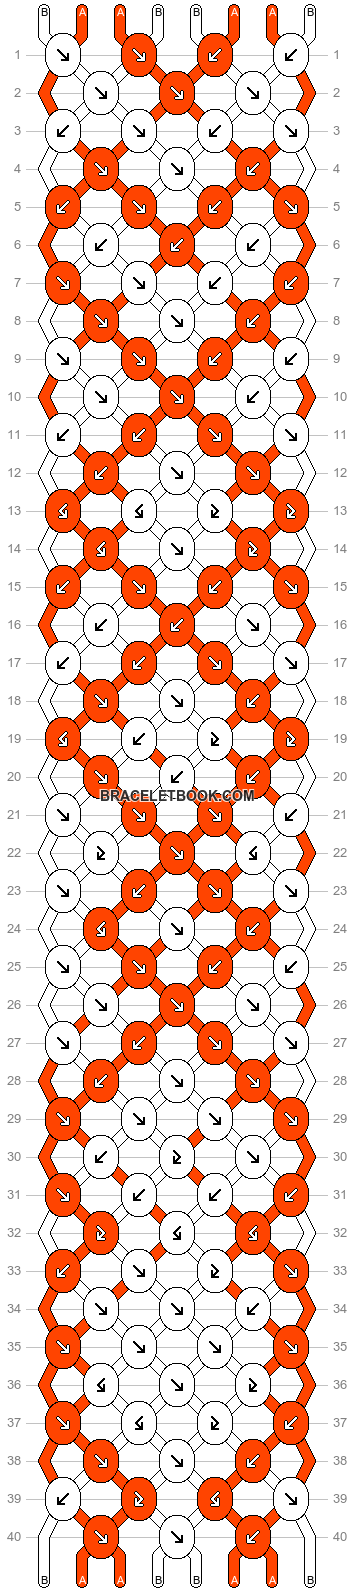 Normal pattern #82934 pattern